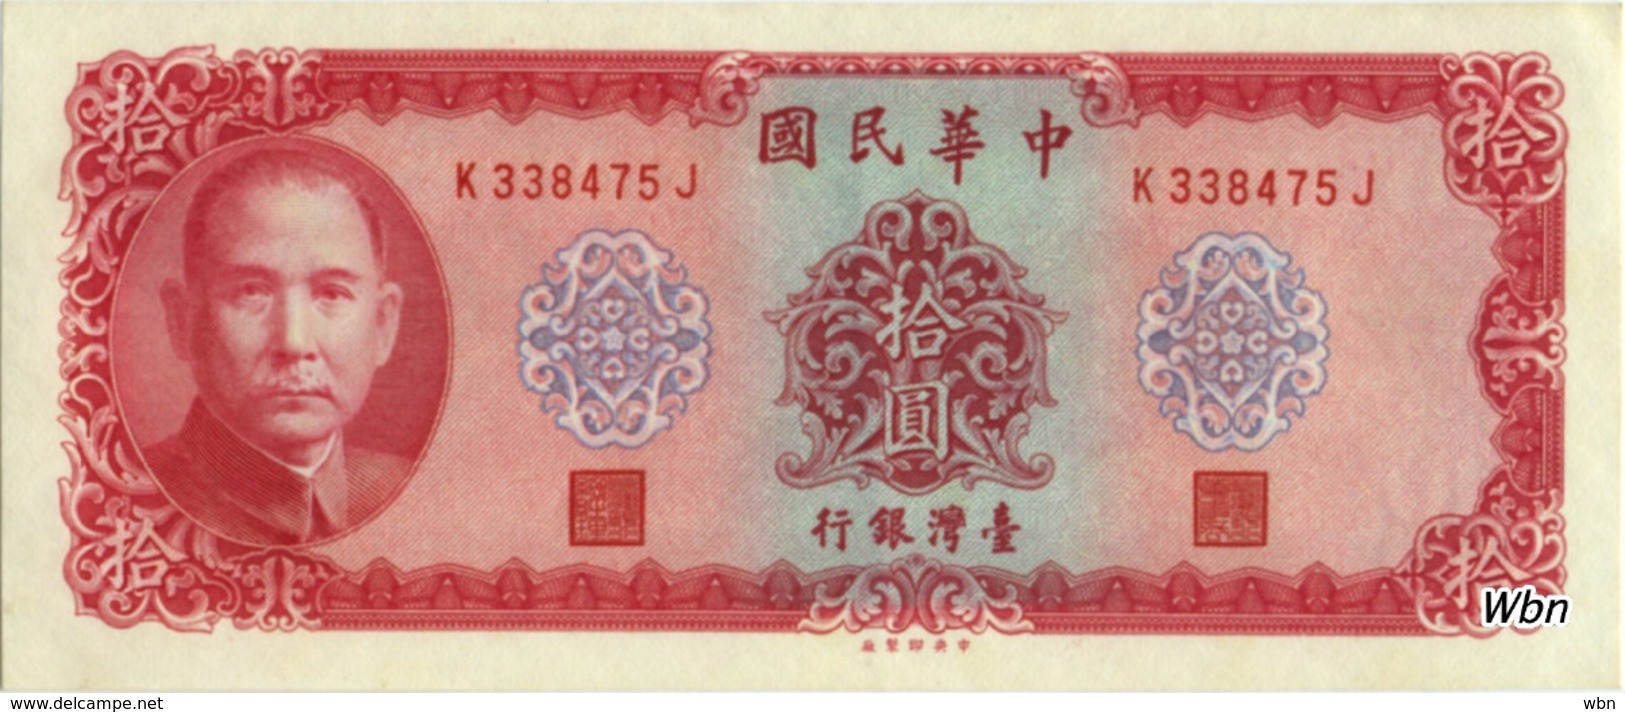 Taiwan 10 NT$ (P1979a) W/o Letter -UNC- - Taiwan